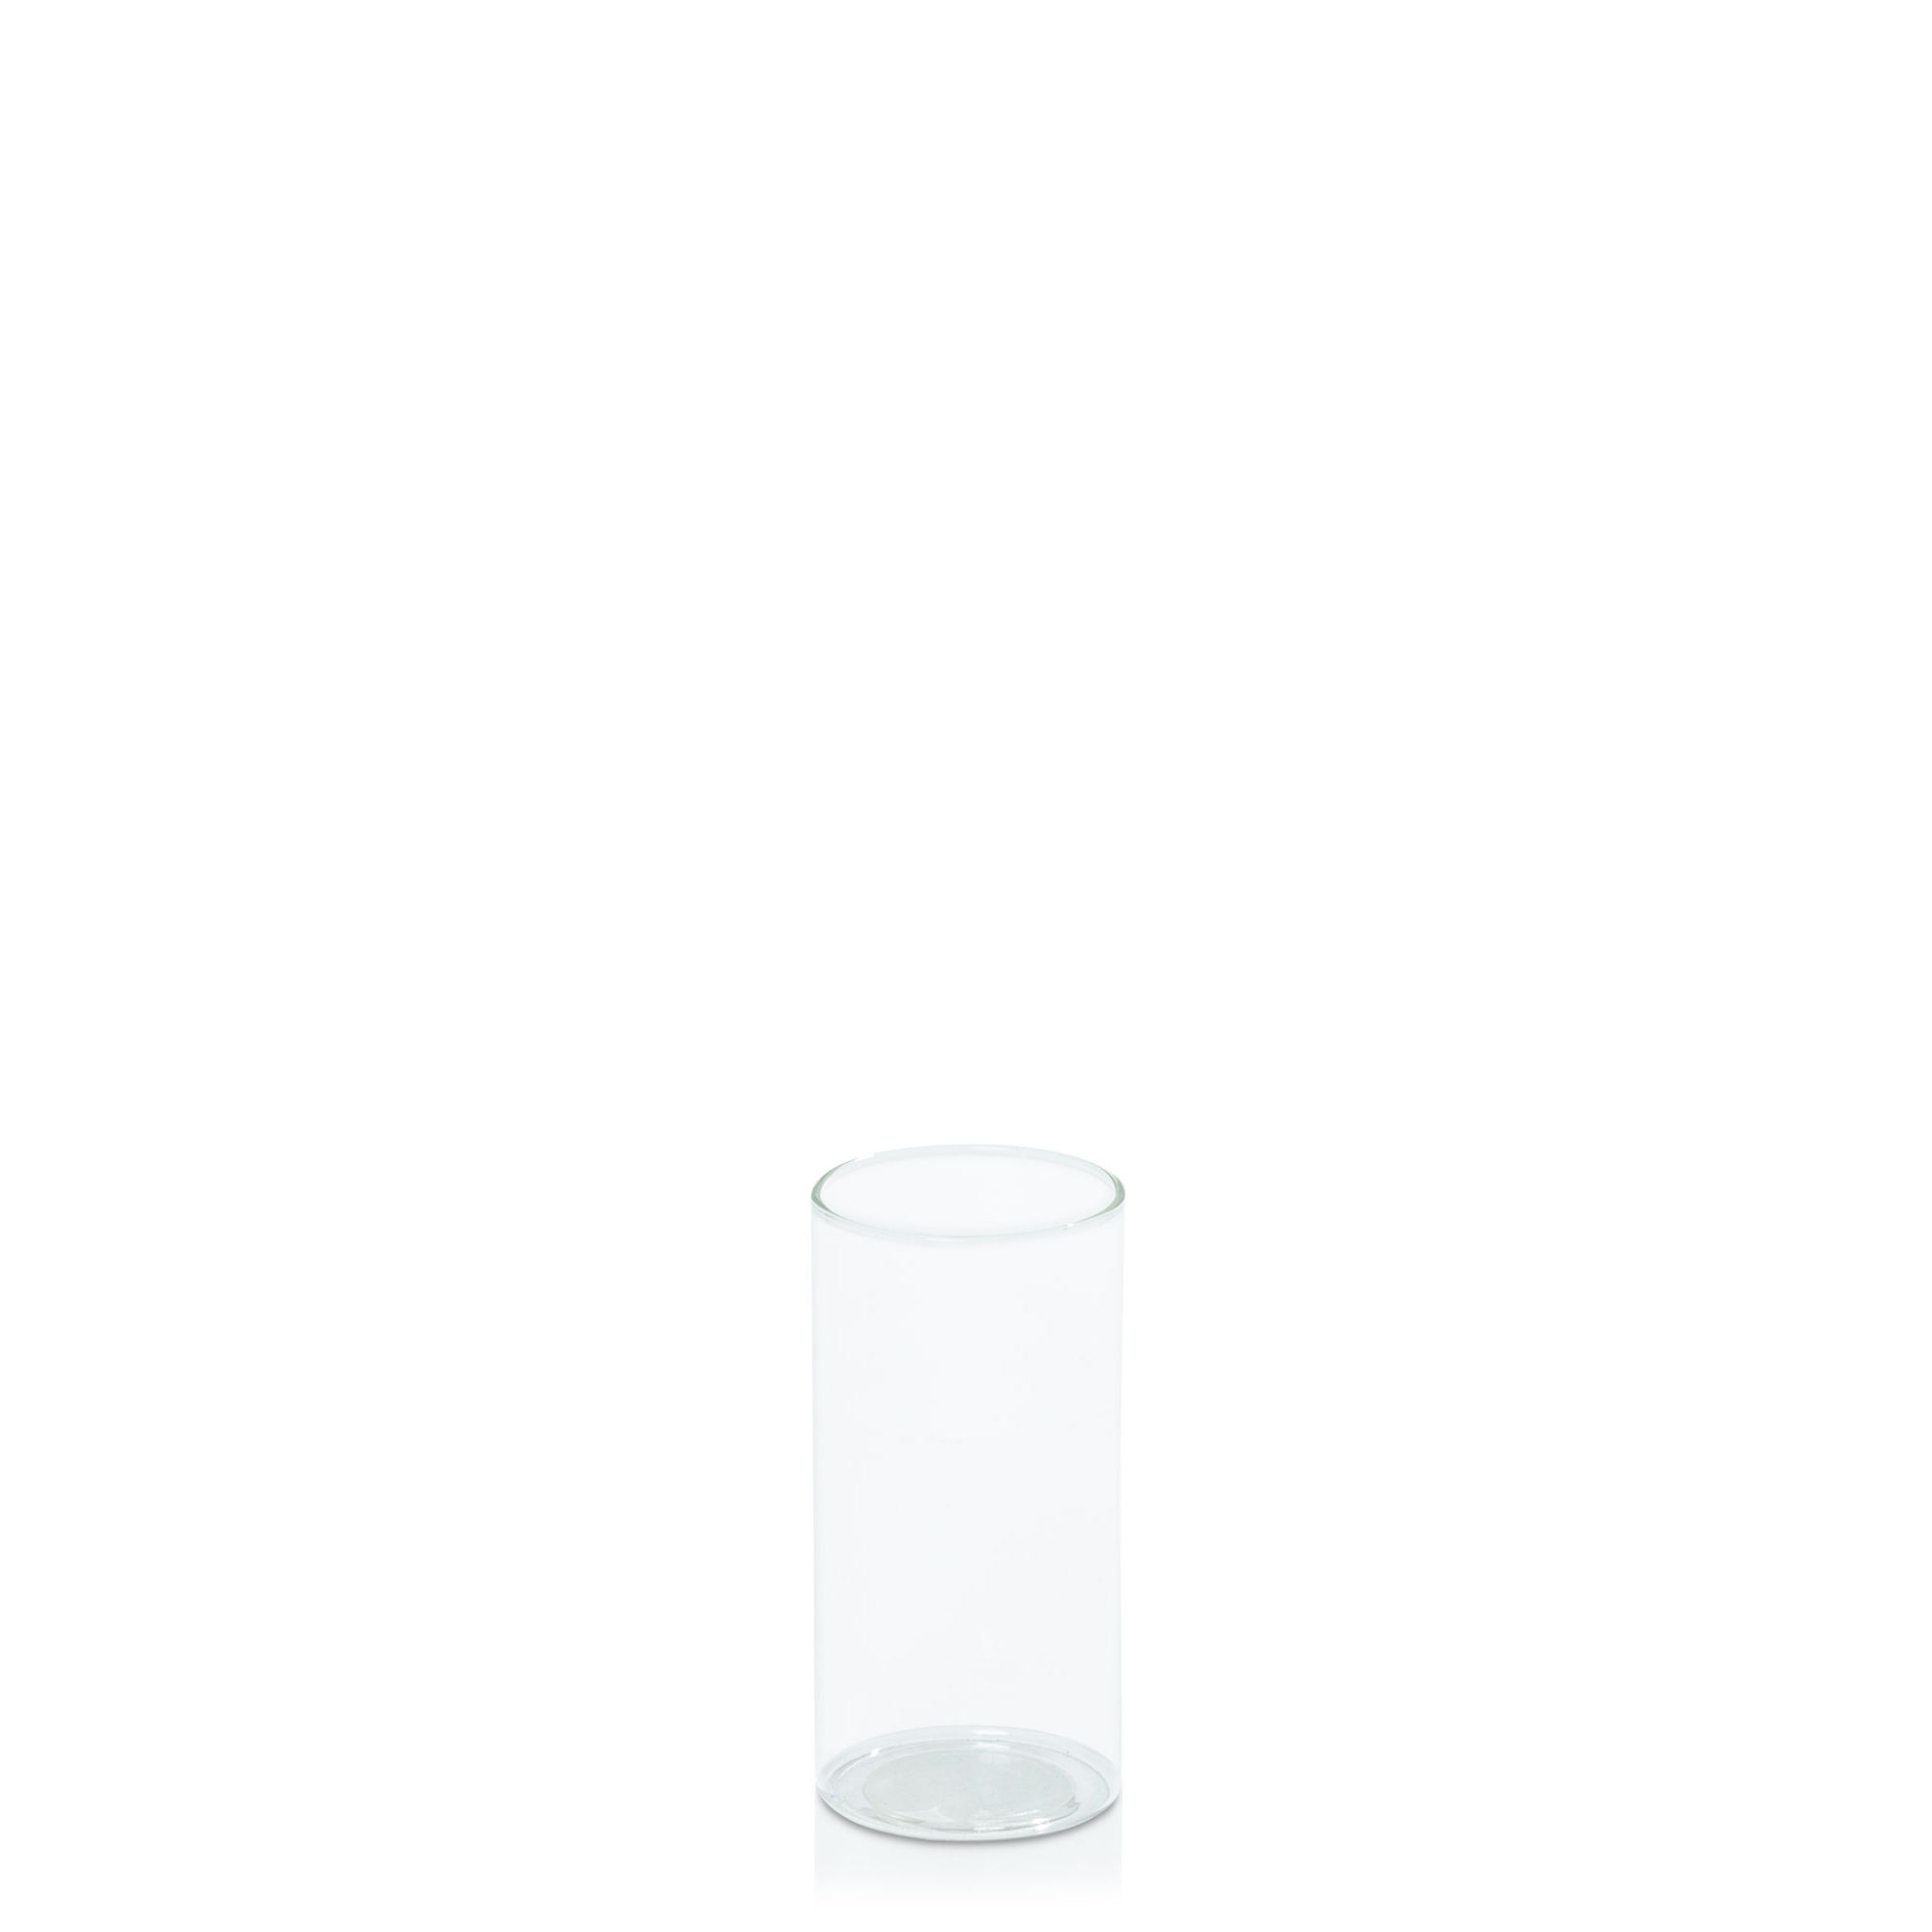 5.8cm x 12cm Glass Cylinder